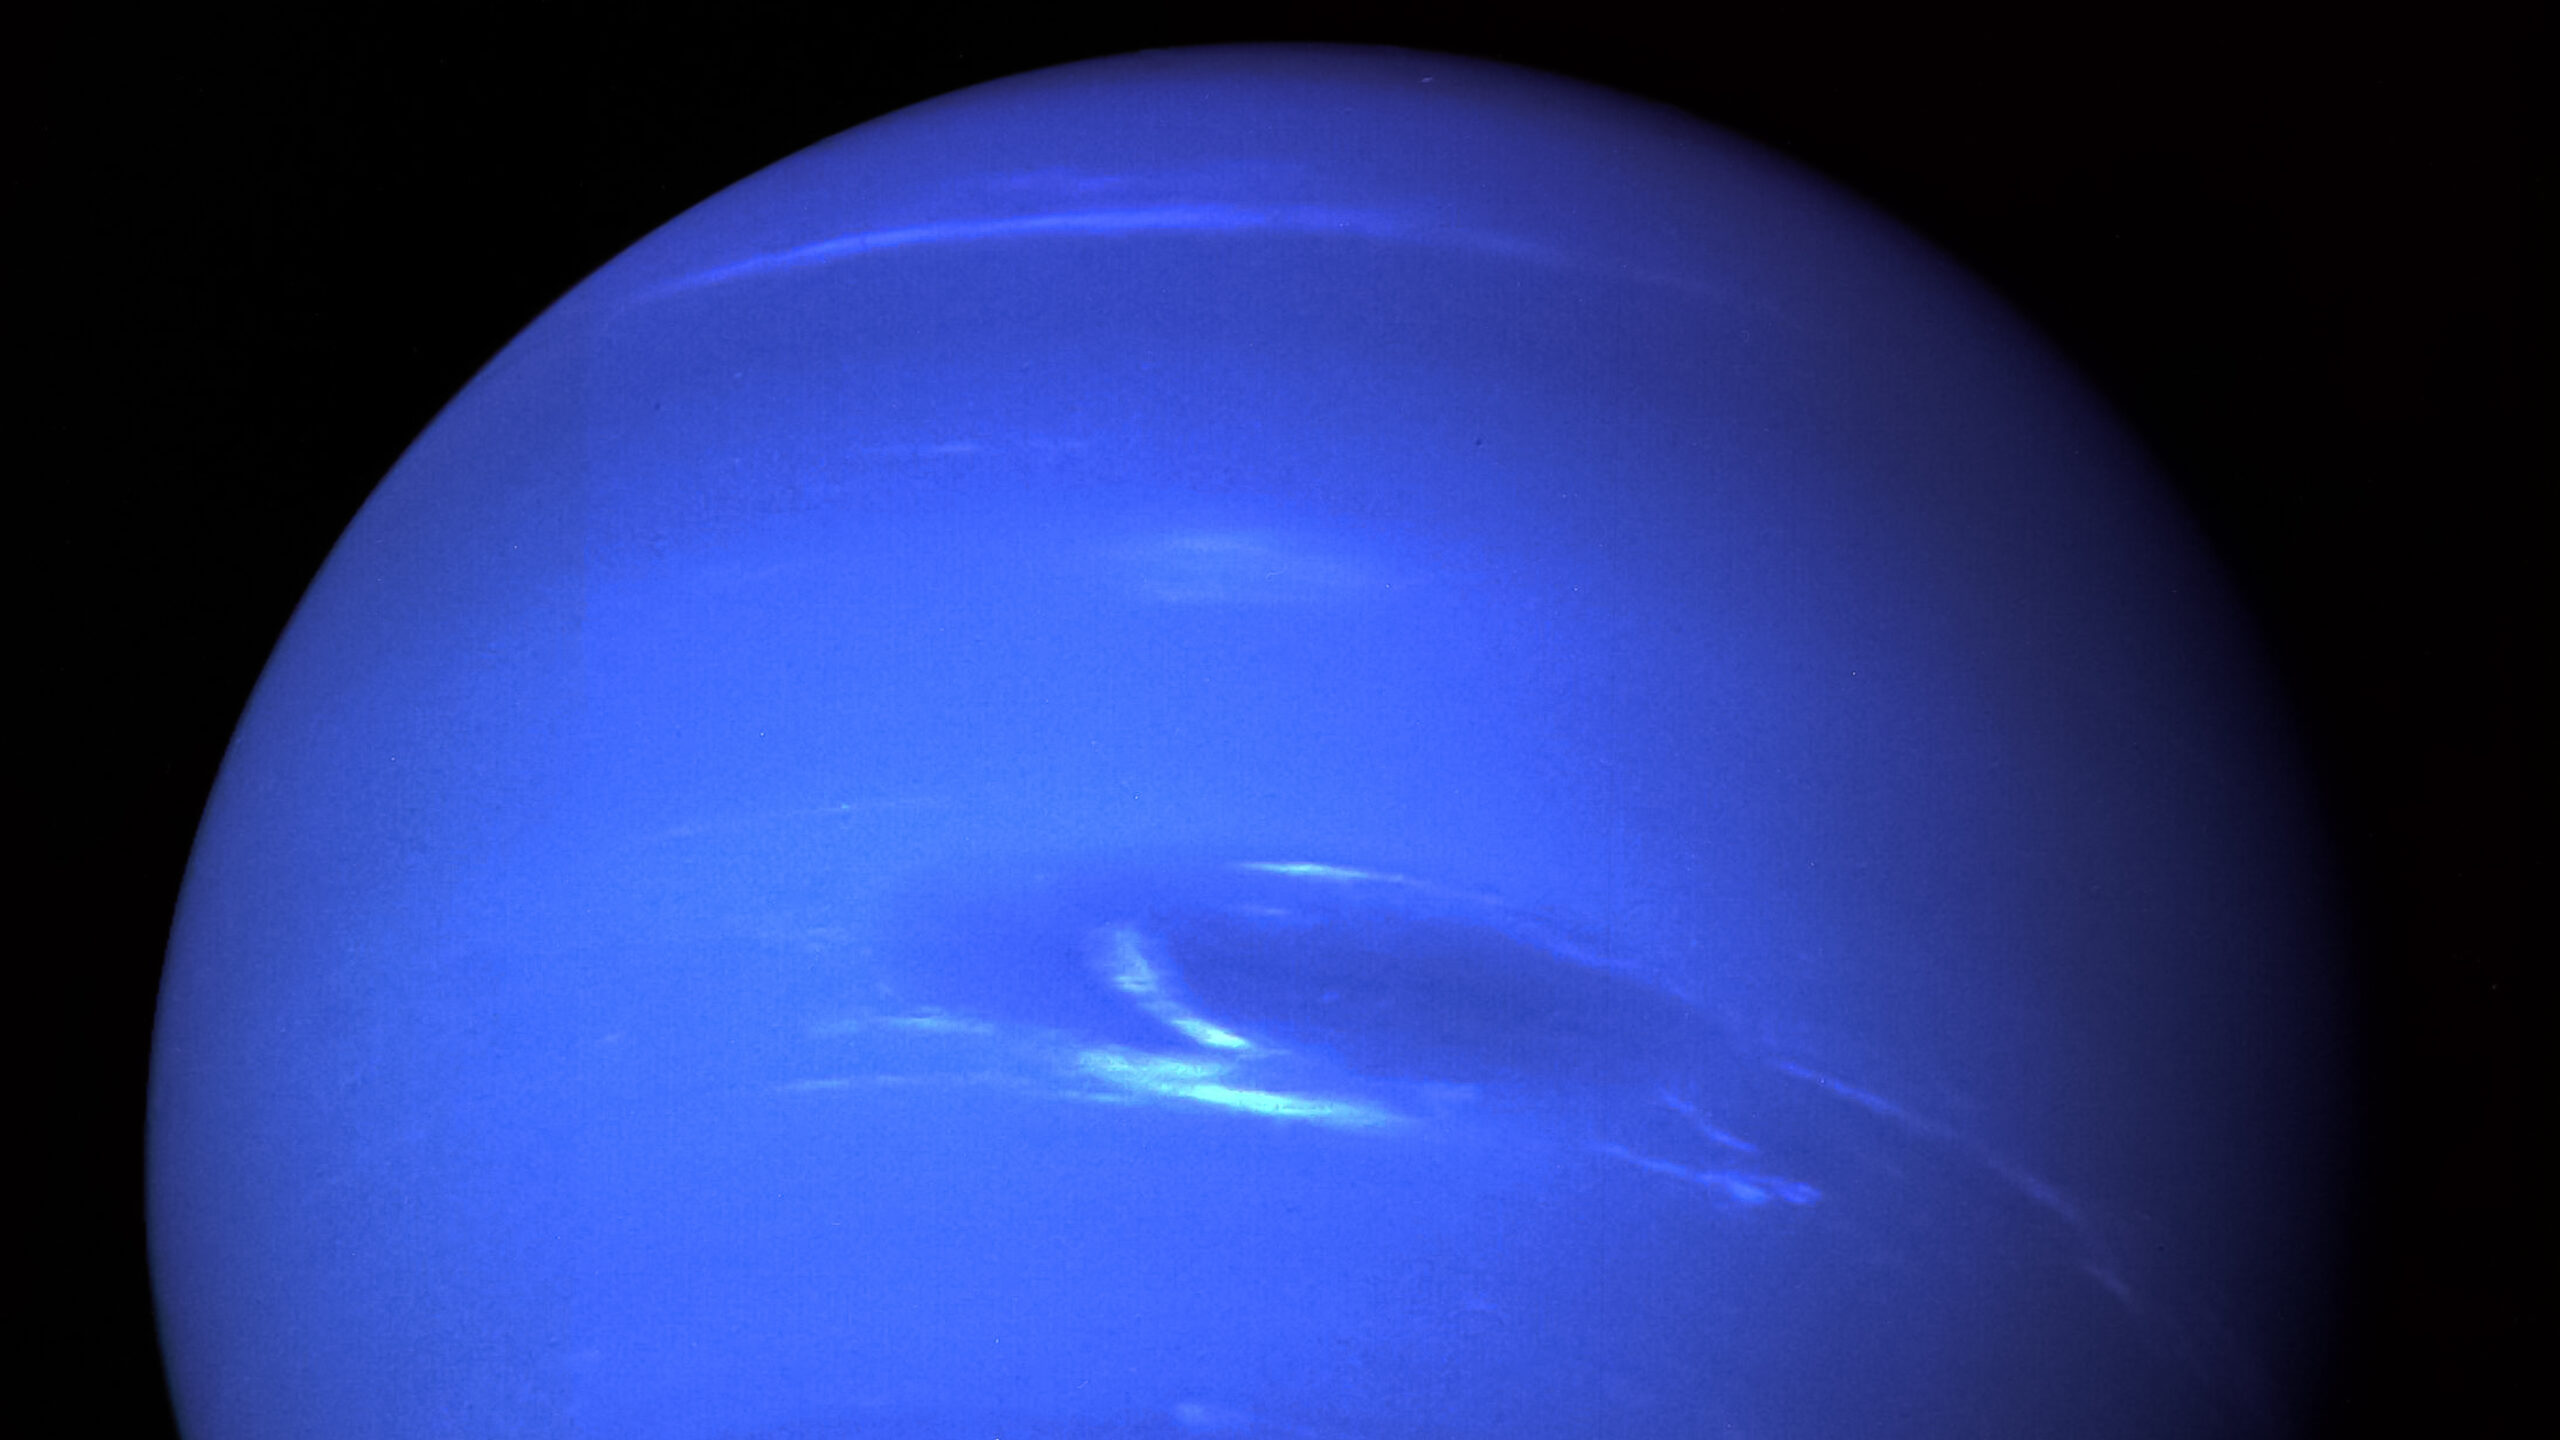 Revelado el verdadero color de Urano y Neptuno tras décadas de fotos mejoradas artificialmente